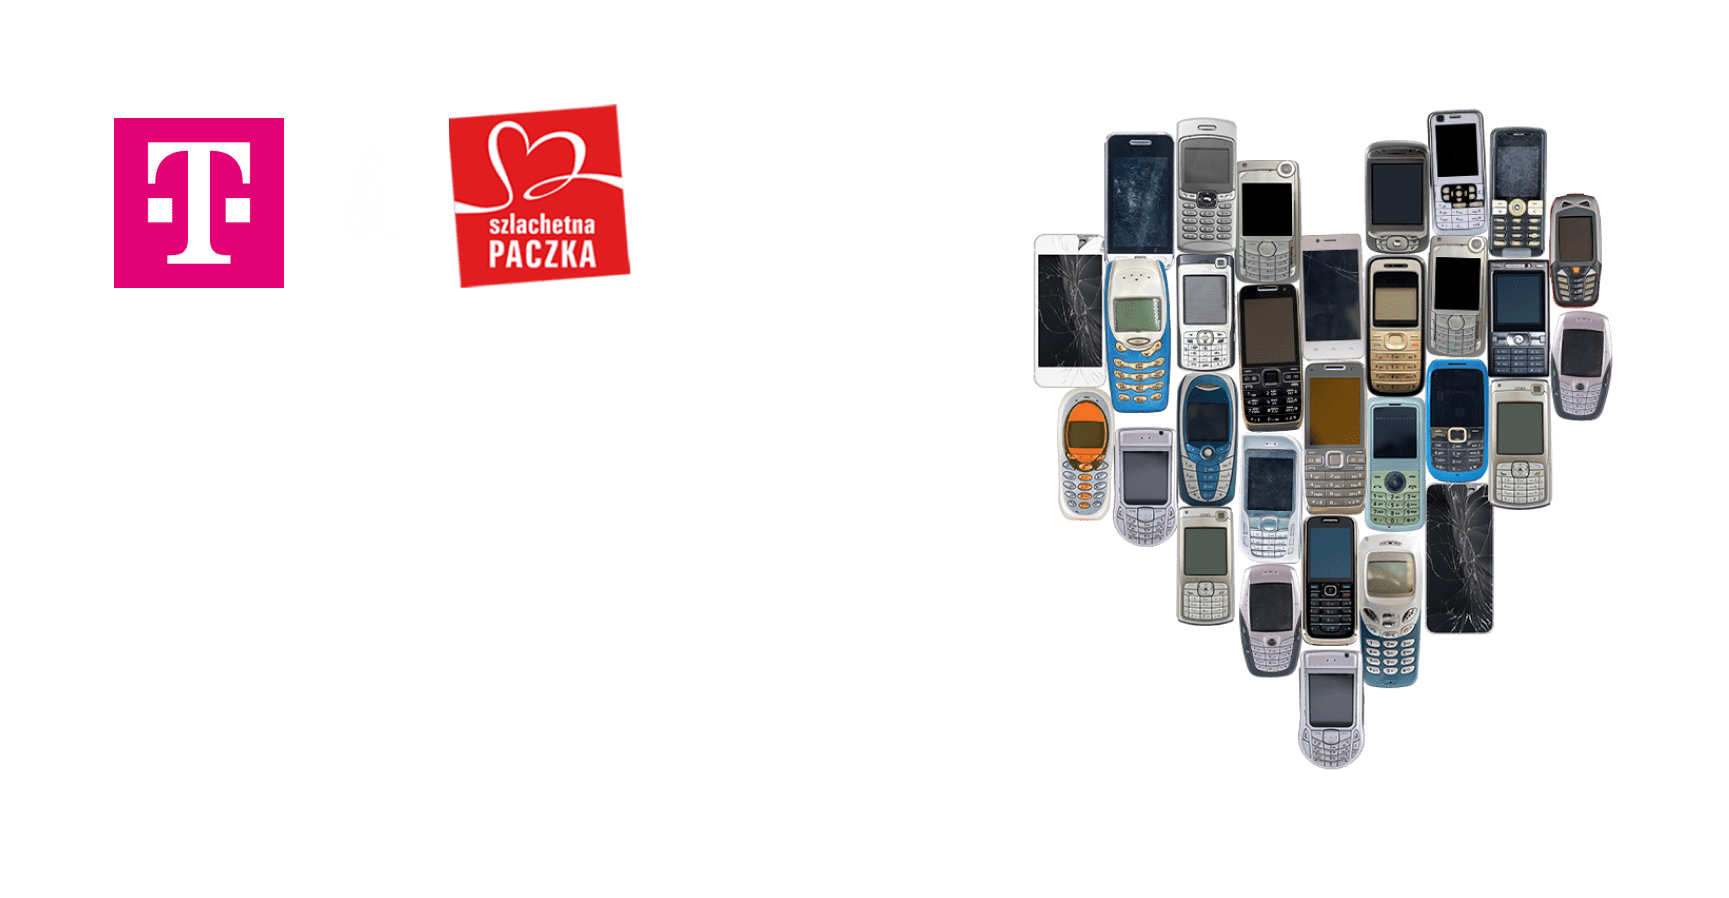 www.t-mobile.pl